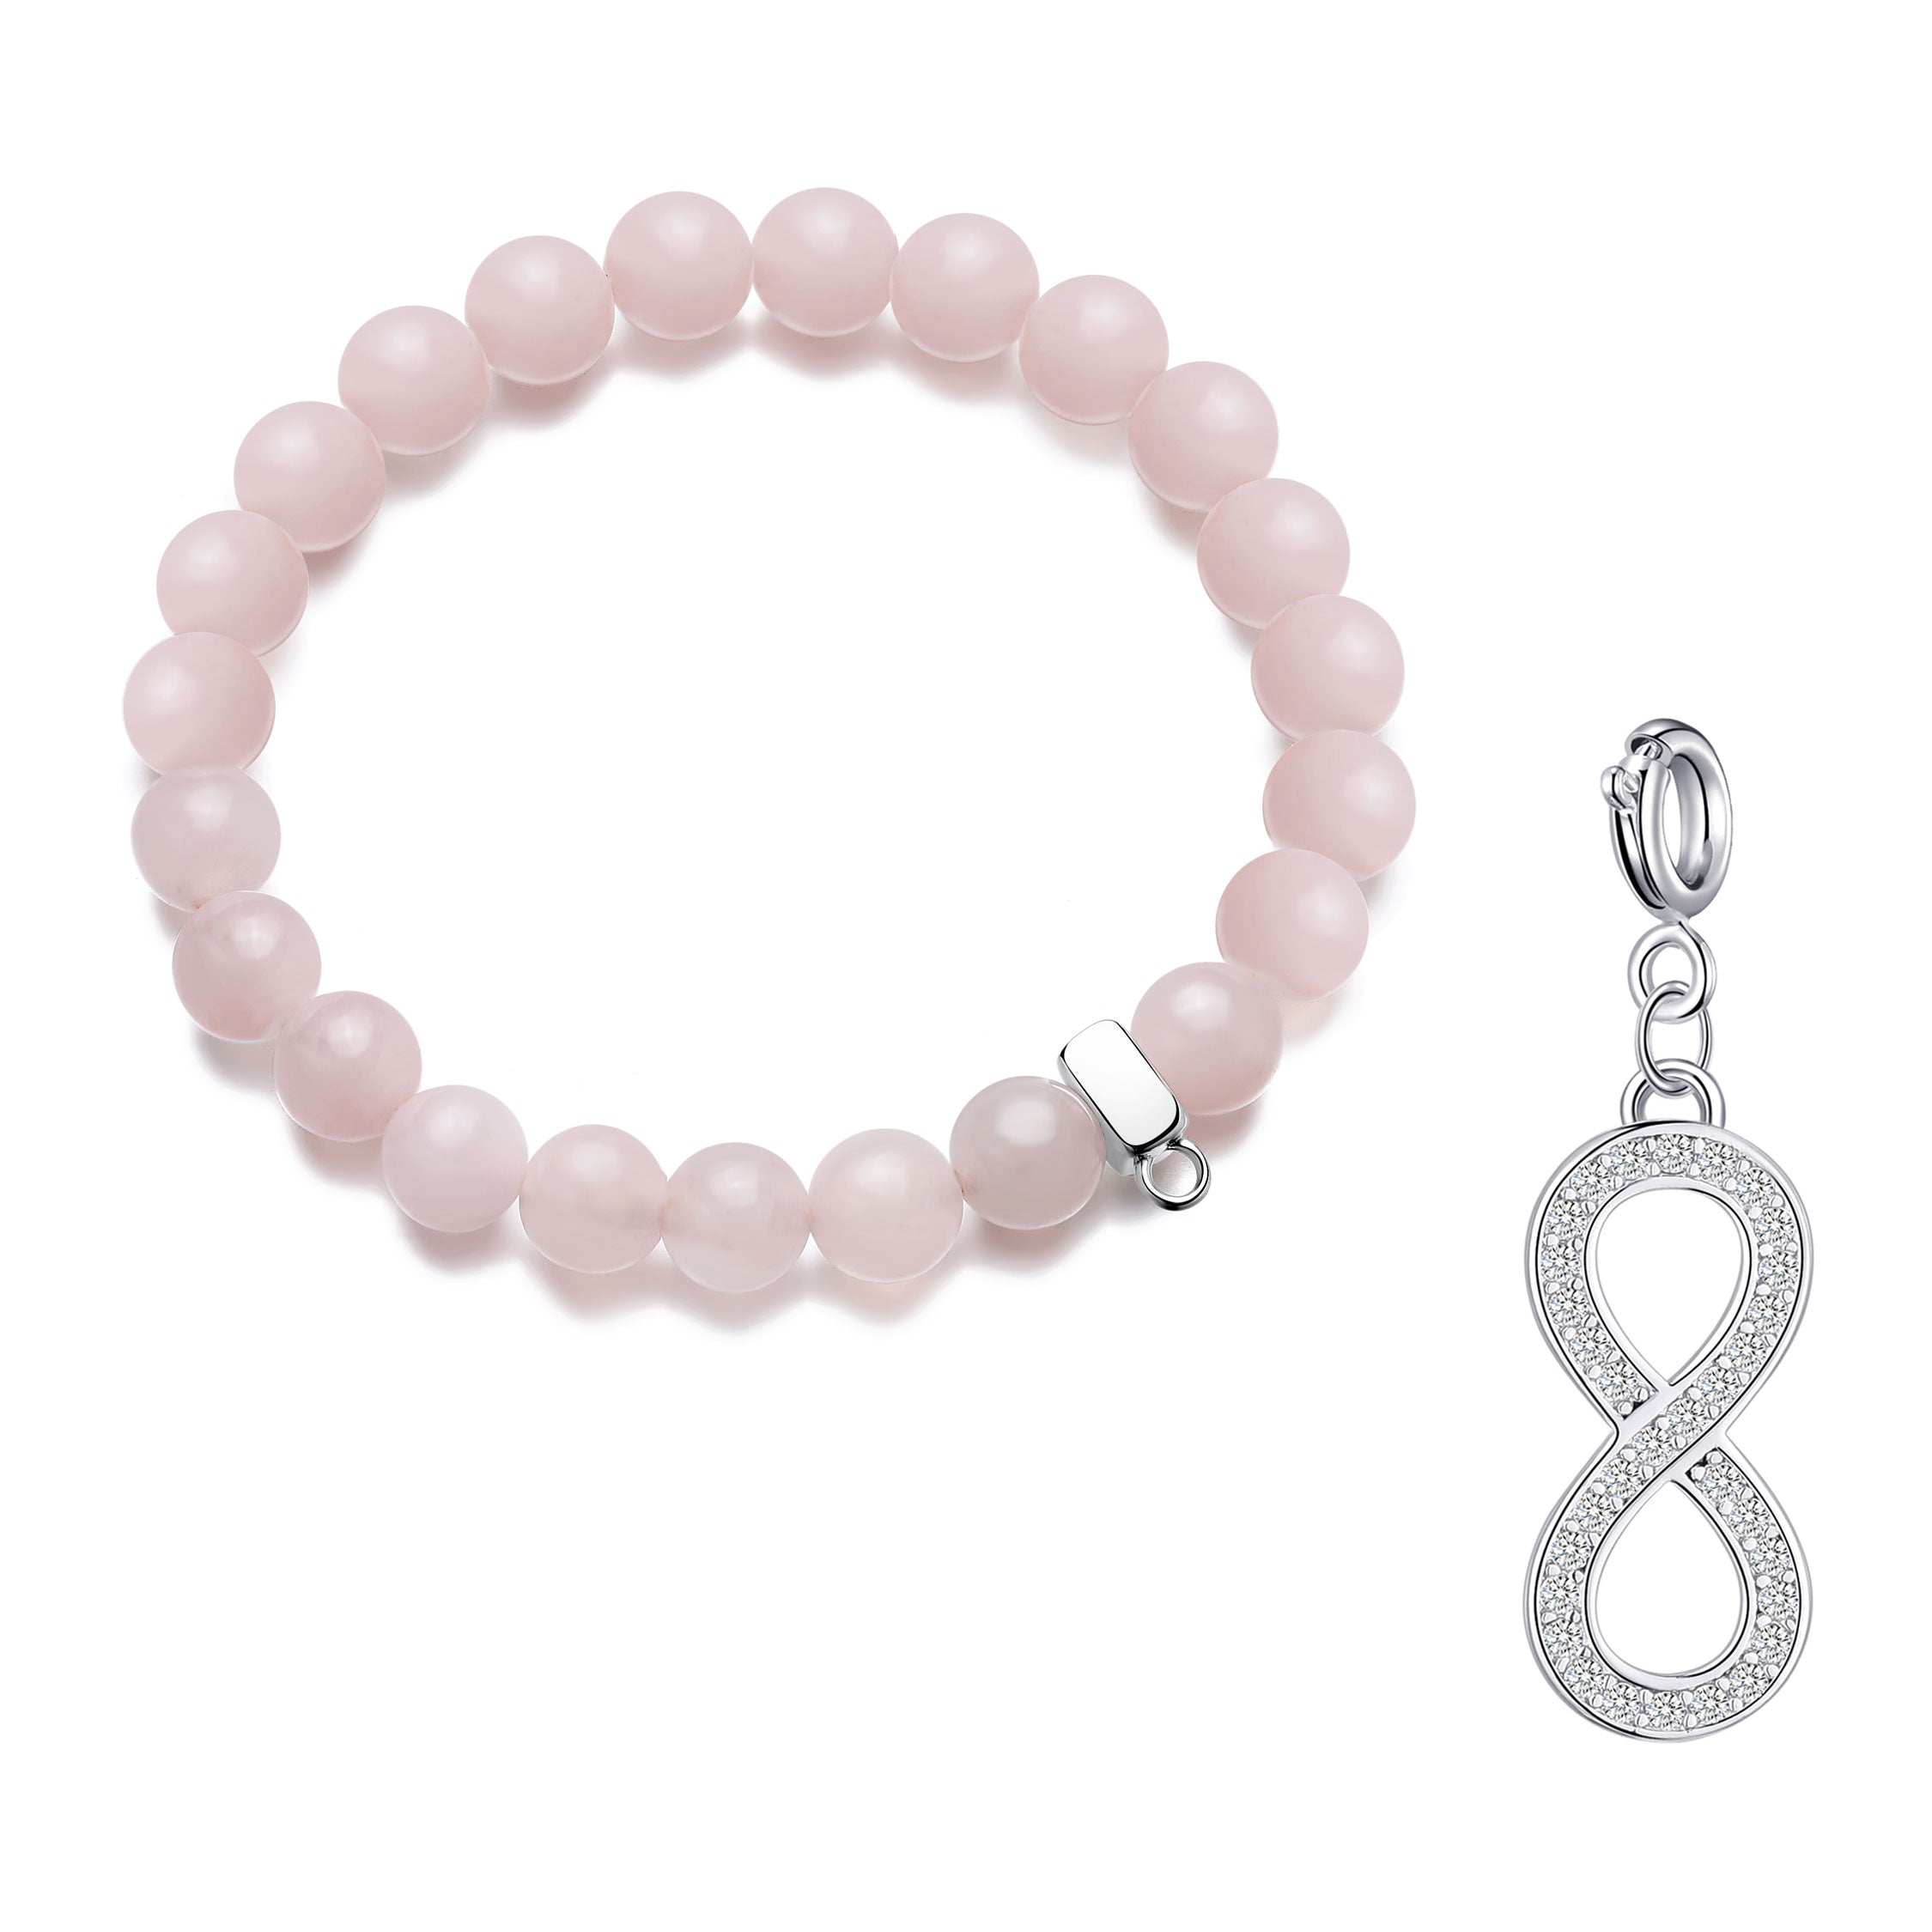 Rose Quartz Gemstone Stretch Bracelet with Charm Created with Zircondia® Crystals